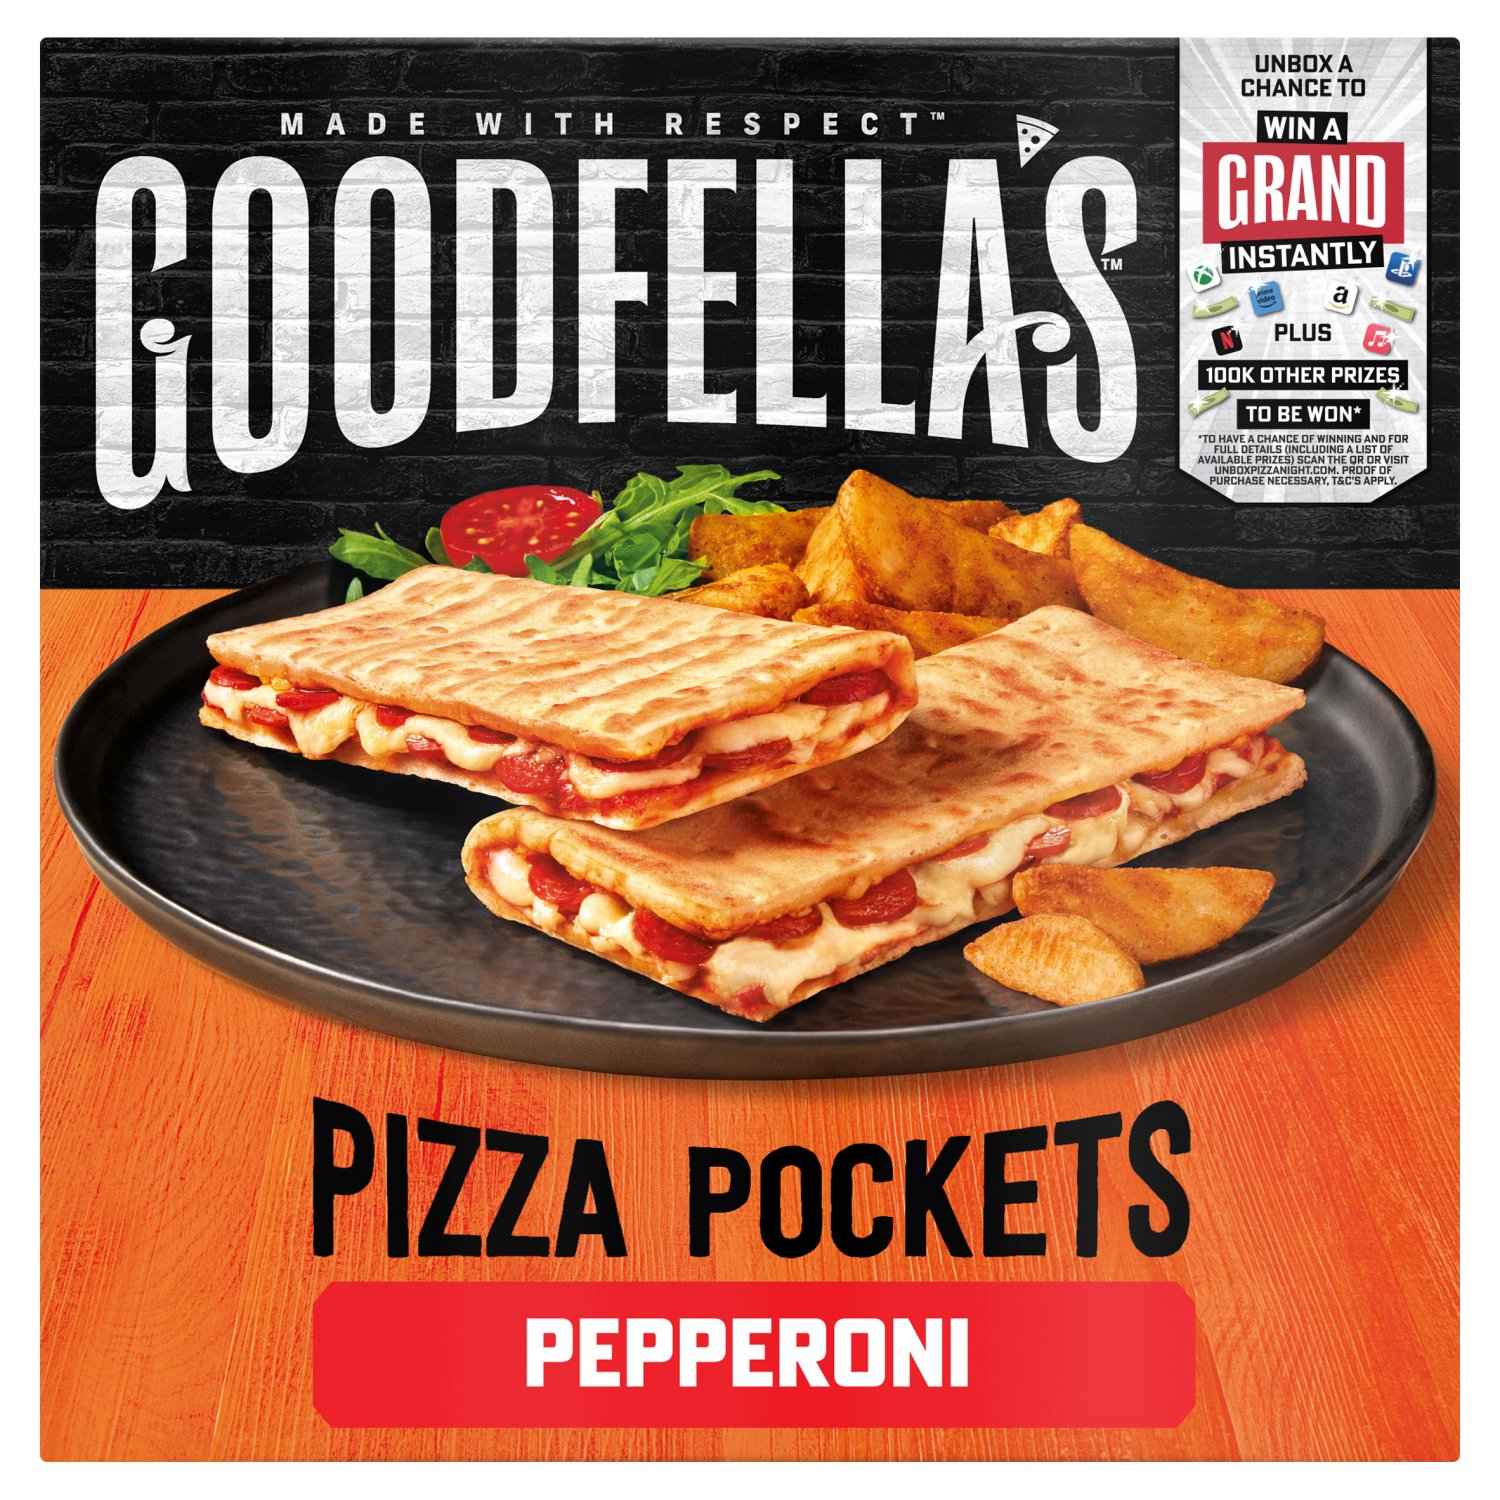 Goodfella's Pepperoni Pizza Pockets (250 g)